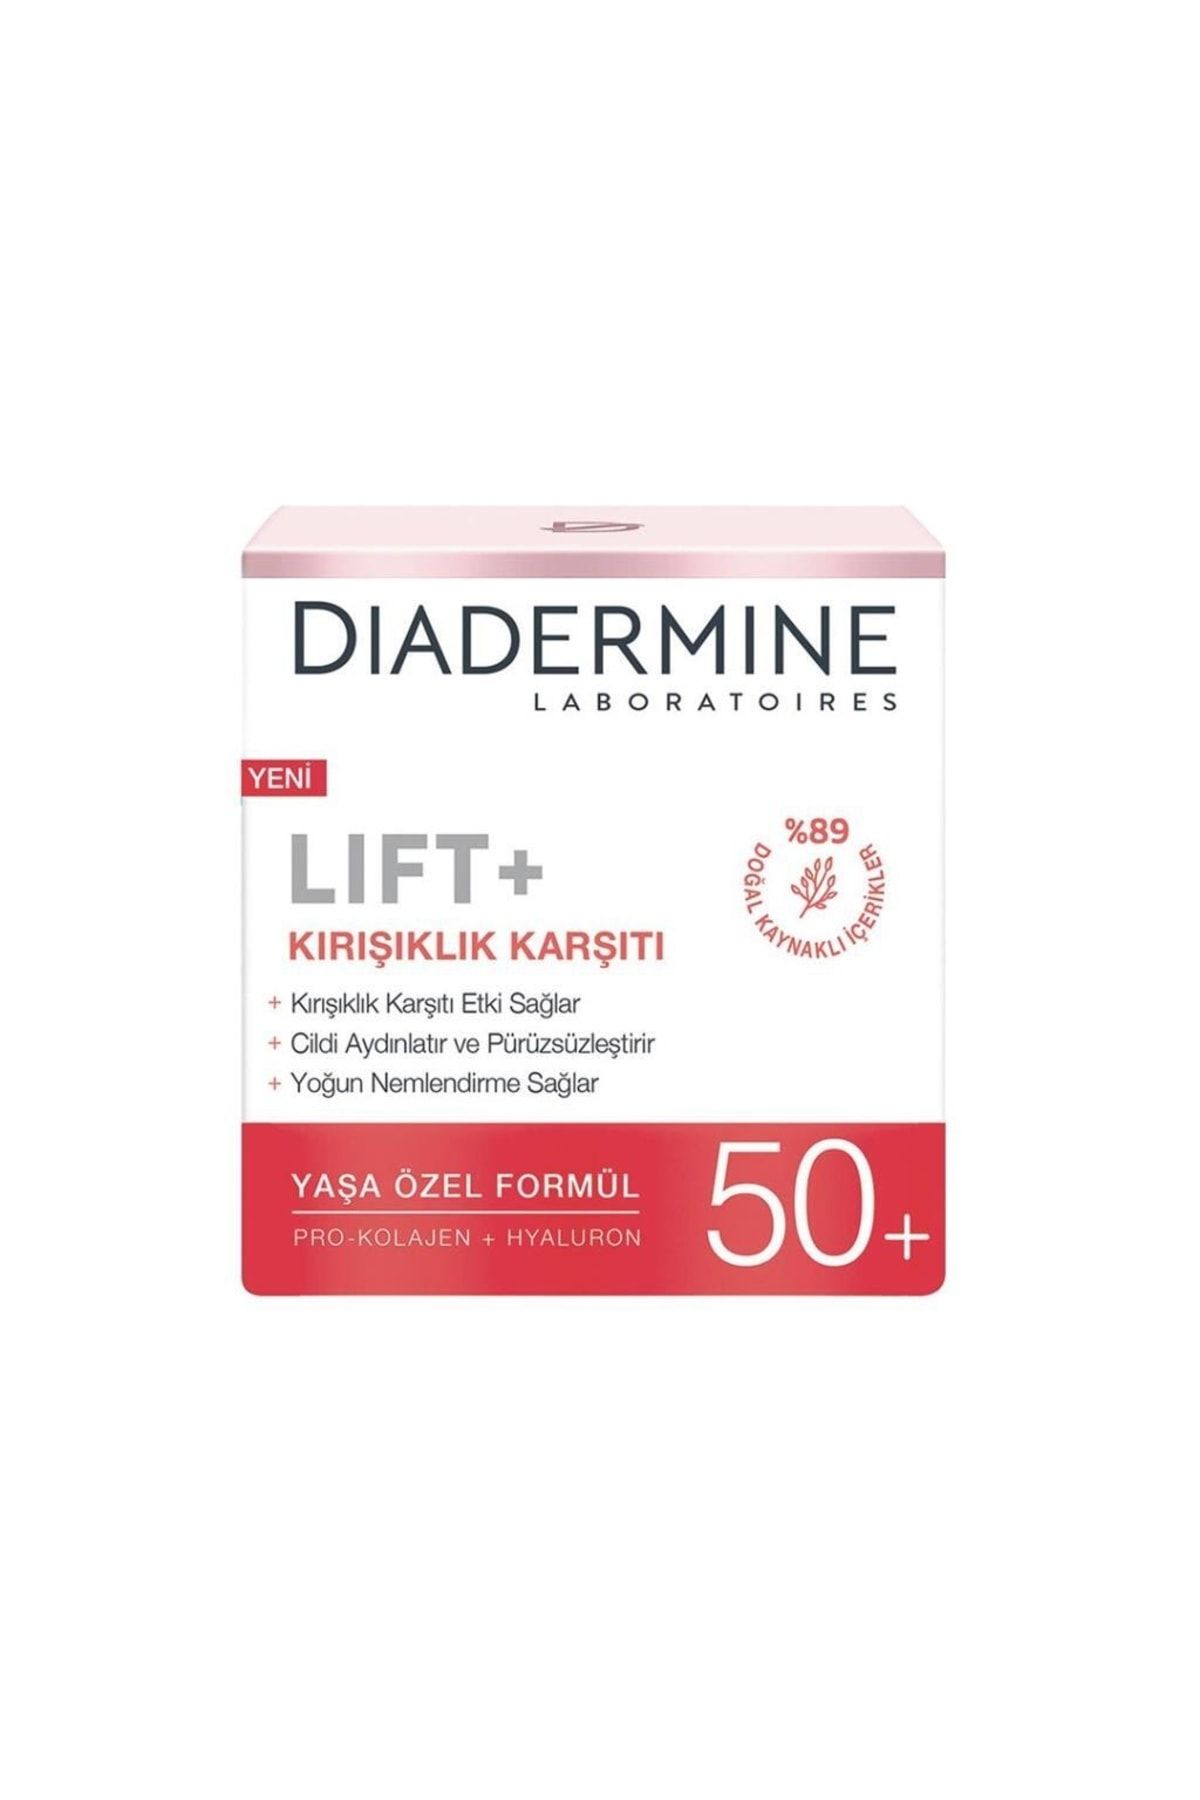 Diadermine Lift+ Kırışıklık Karşıtı 50+ Yaşa Özel Formül 50ml